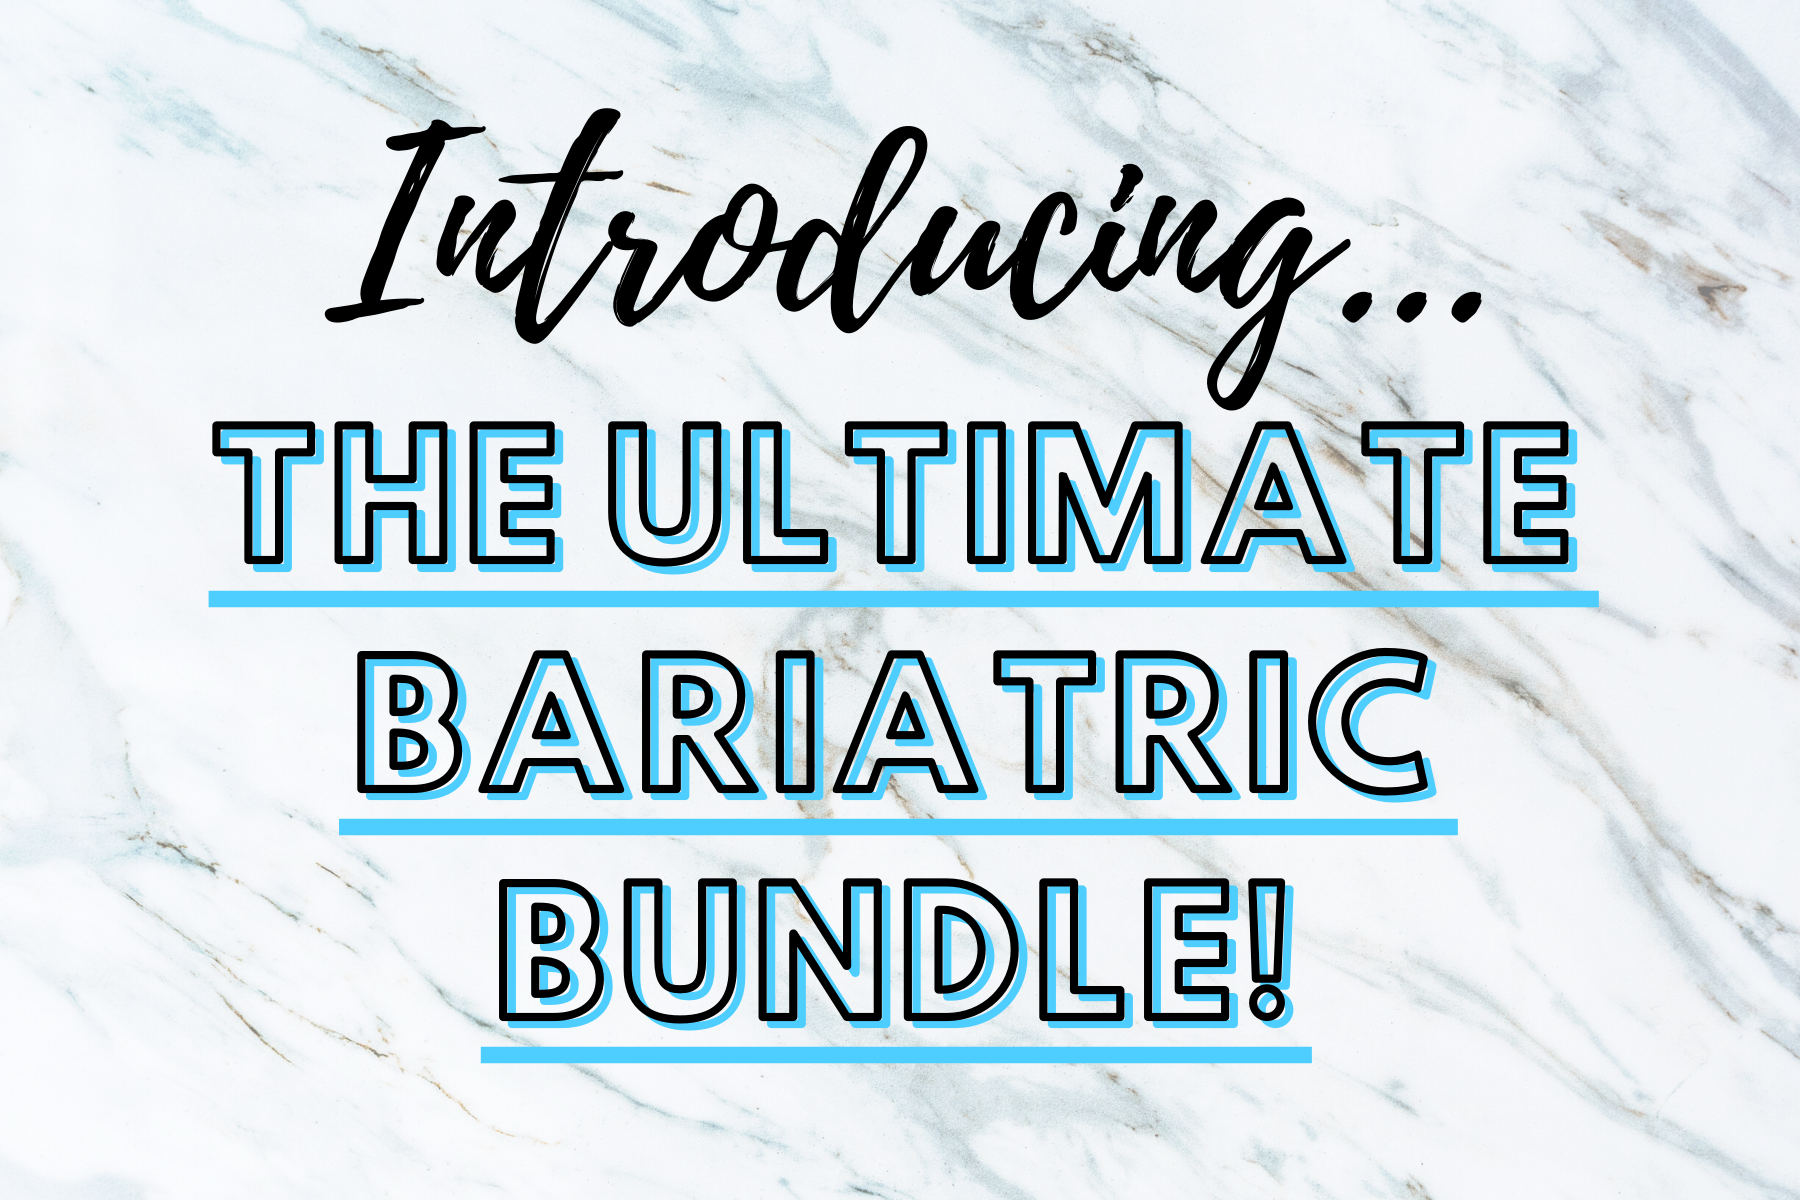 bariatric surgery bundle ultimate